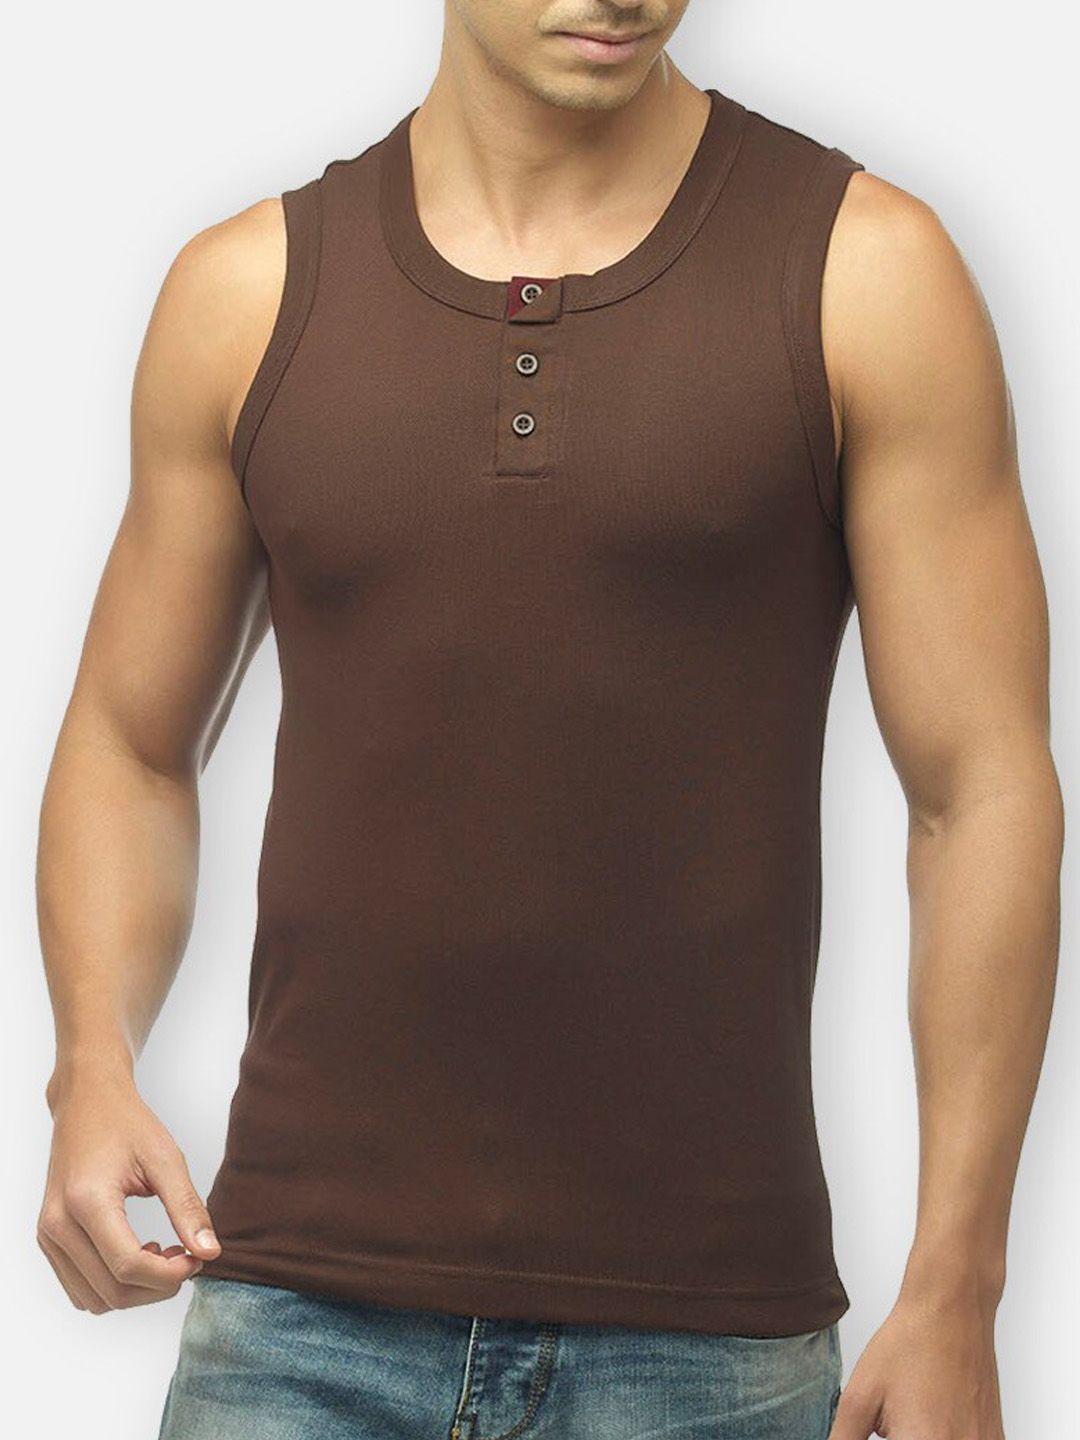 zoiro pure cotton durable innerwear vests